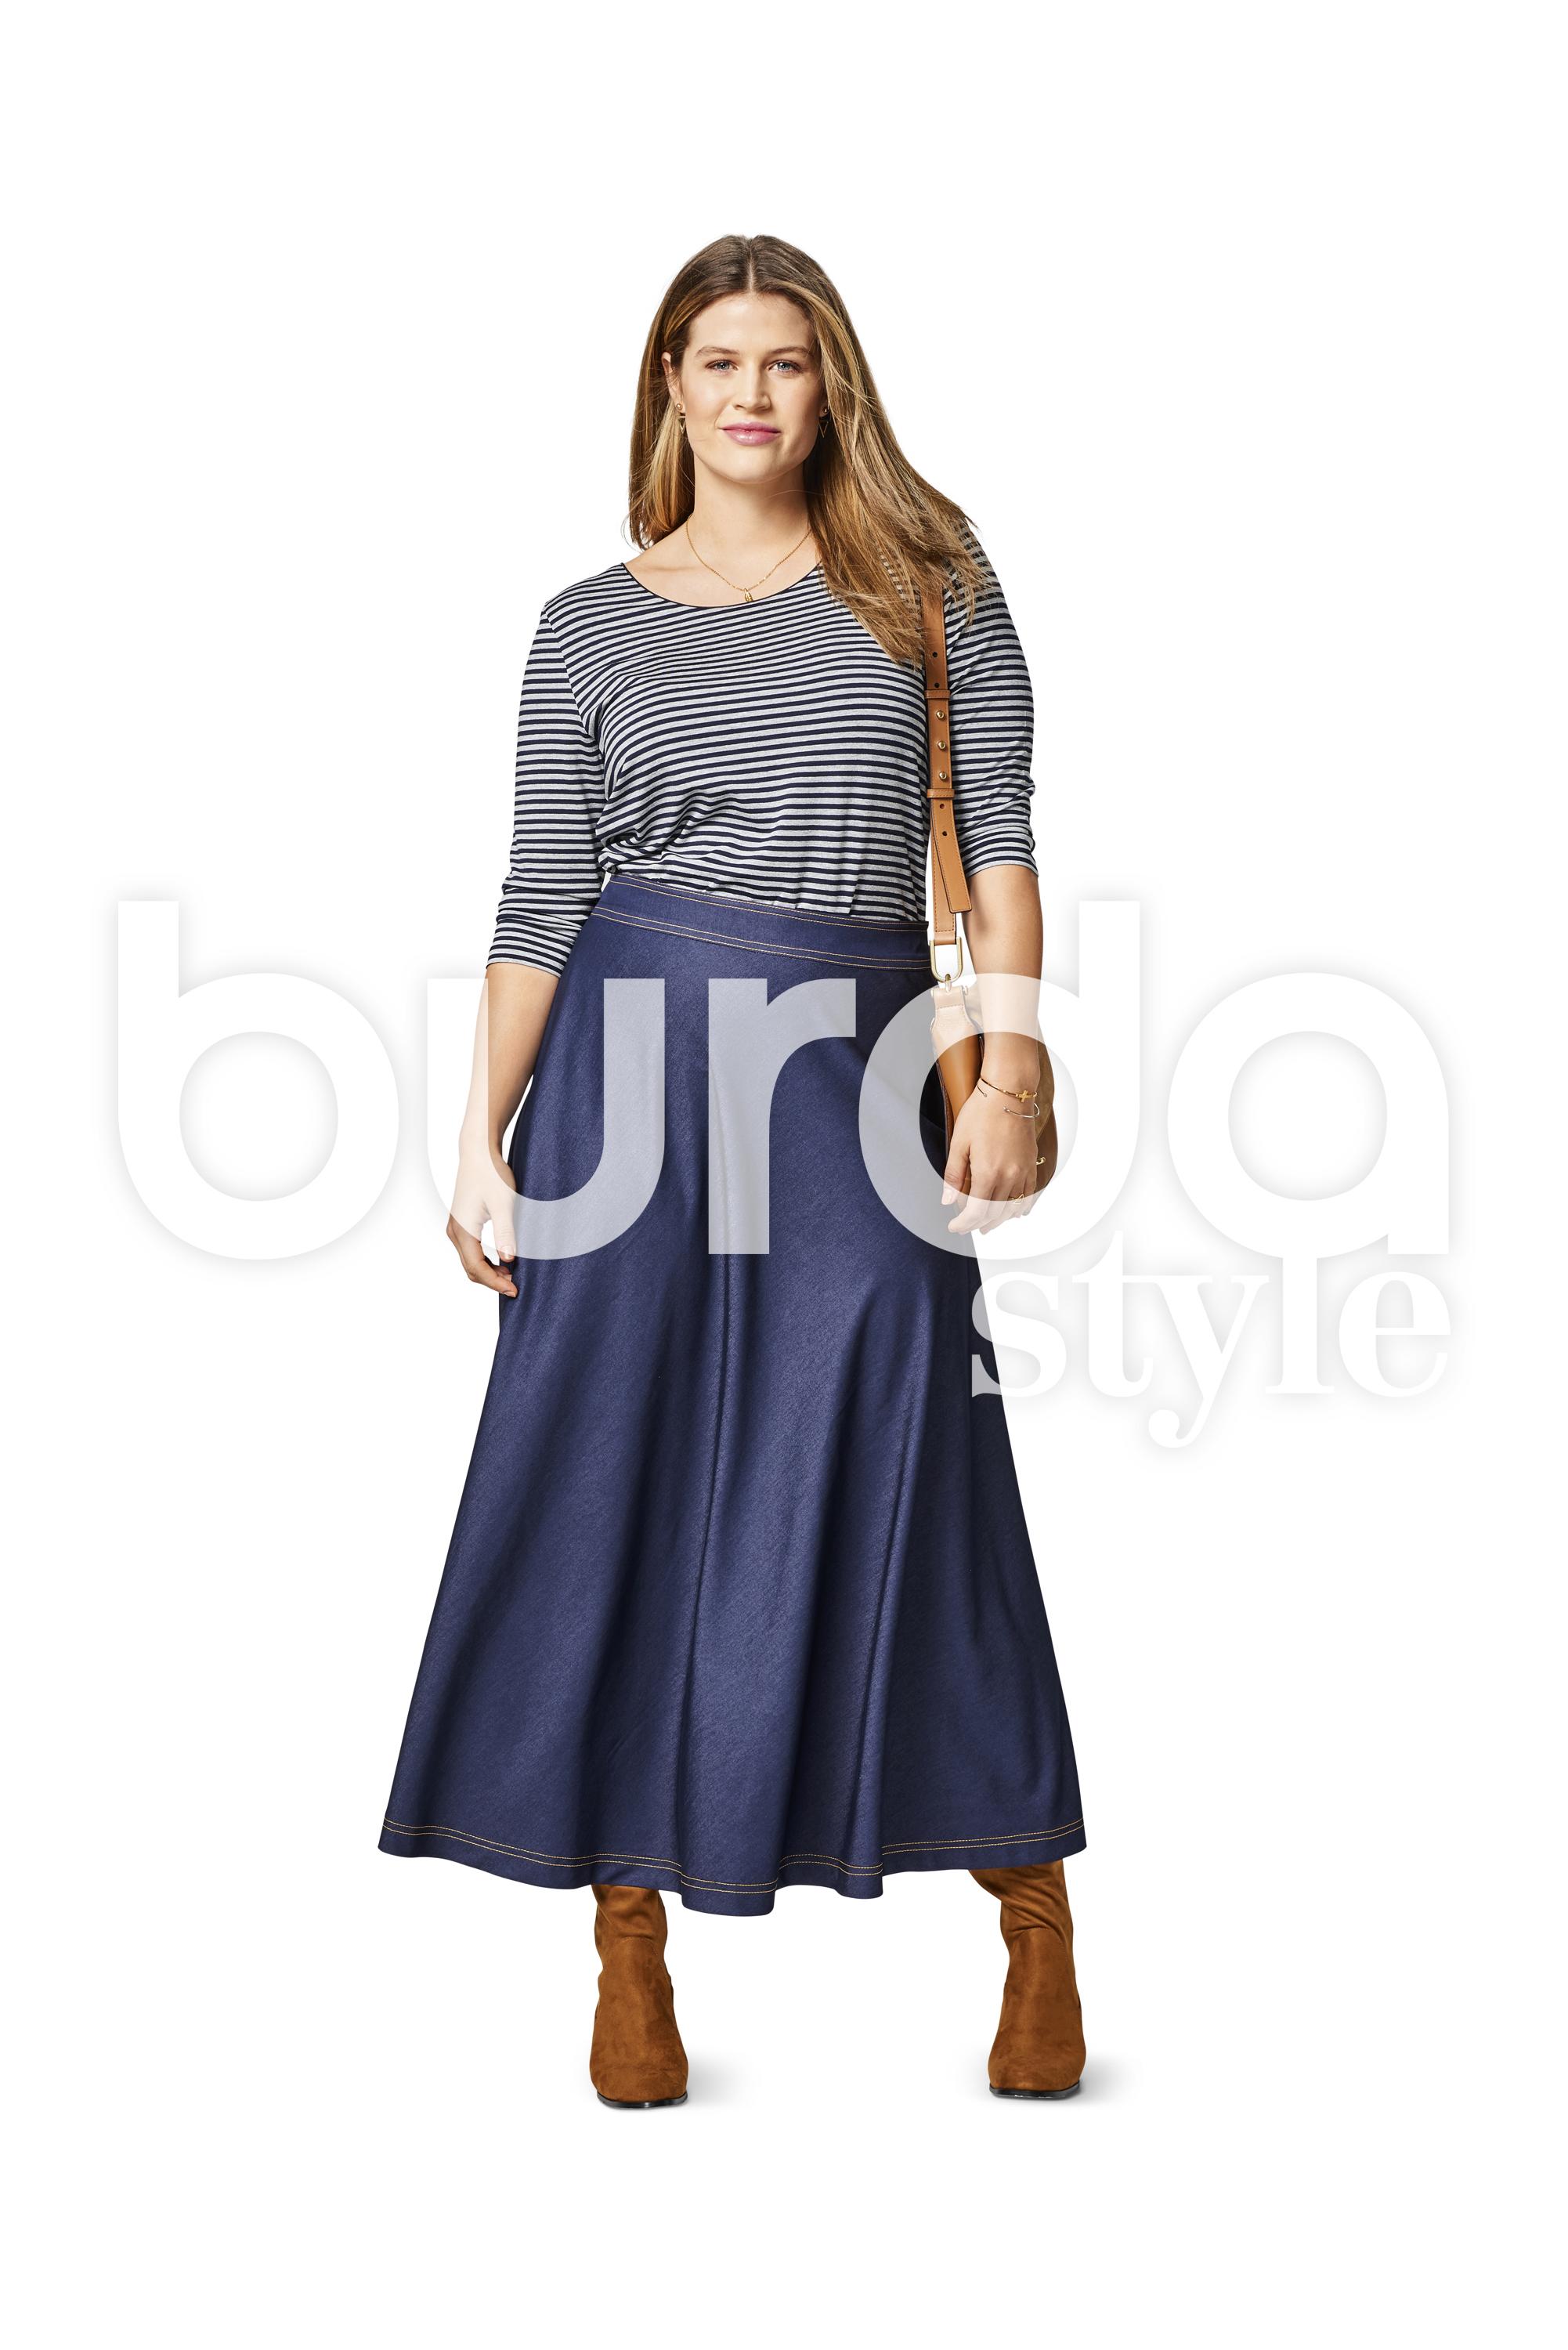 Burda B6491 Women's Flared Skirt